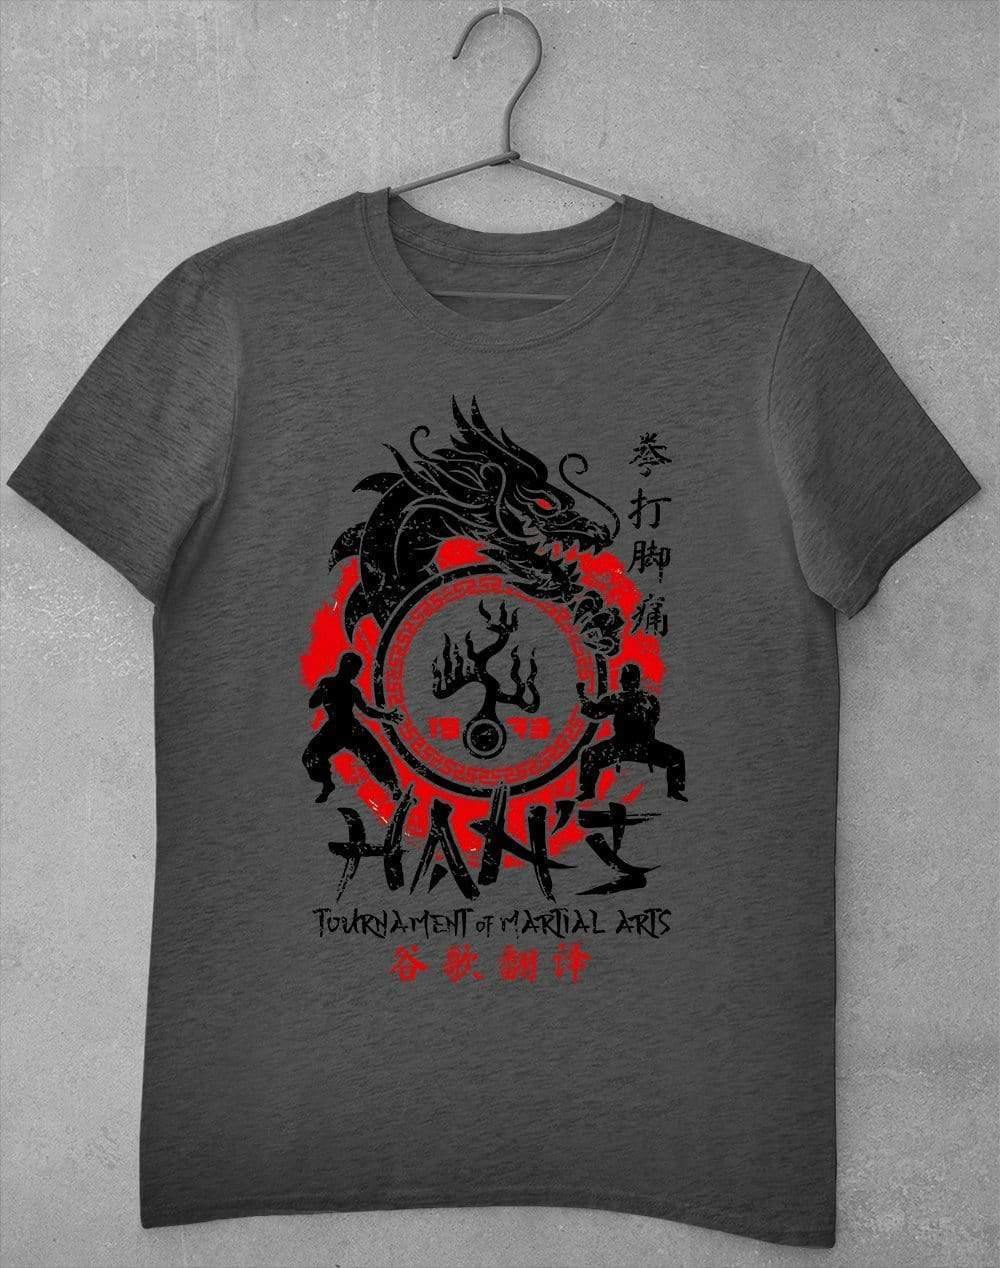 Han's Tournament of Martial Arts T-Shirt S / Dark Heather  - Off World Tees